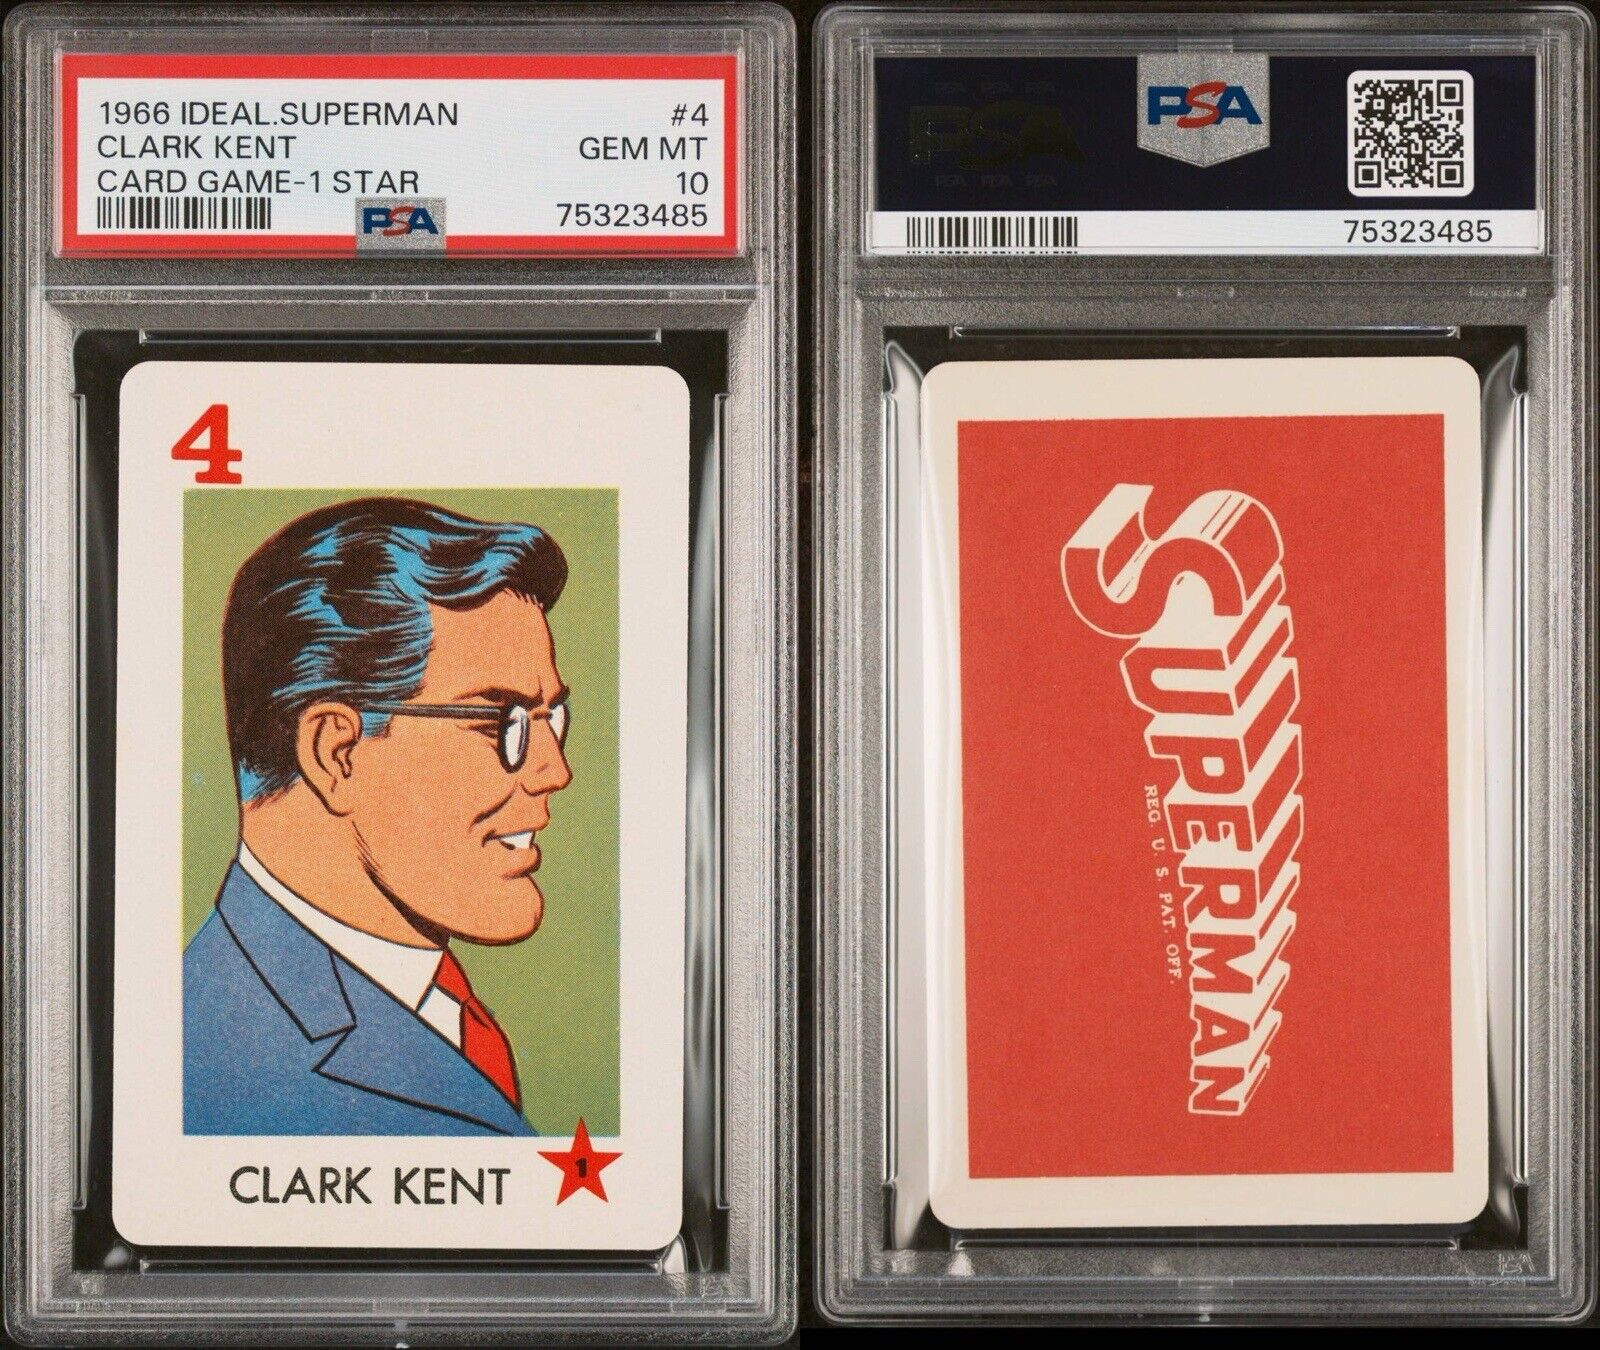 RARE VINTAGE 1966 IDEAL SUPERMAN CLARK KENT CARD GAME ROOKIE PSA 10 GEM MINT